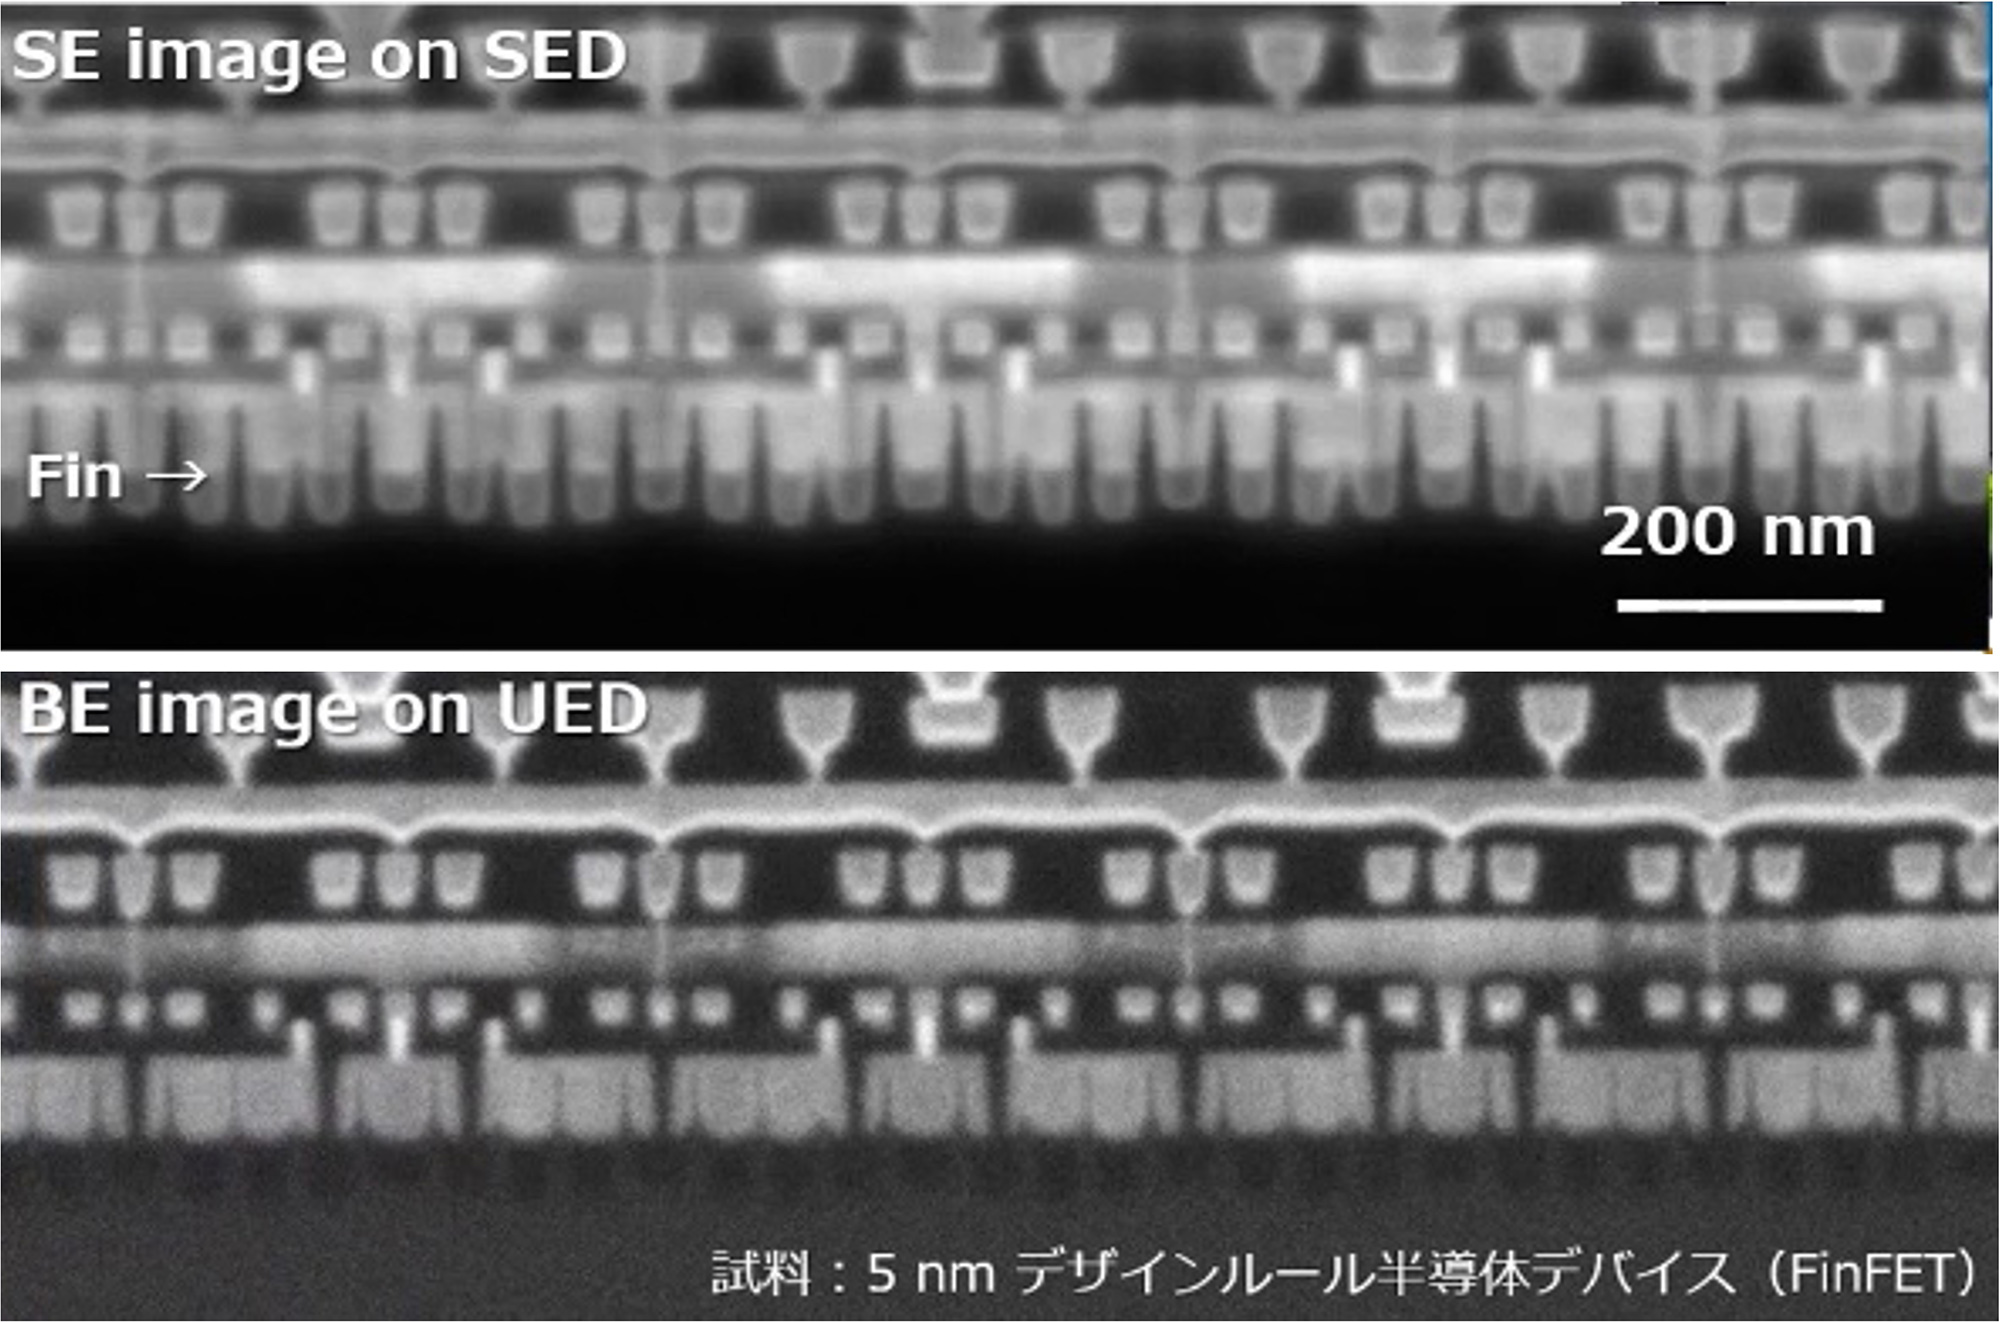 SE image on SEDとBE image on UEDの画像を並べた写真 (試料: 5 nm デザインルール半導体デバイス (FinFET))